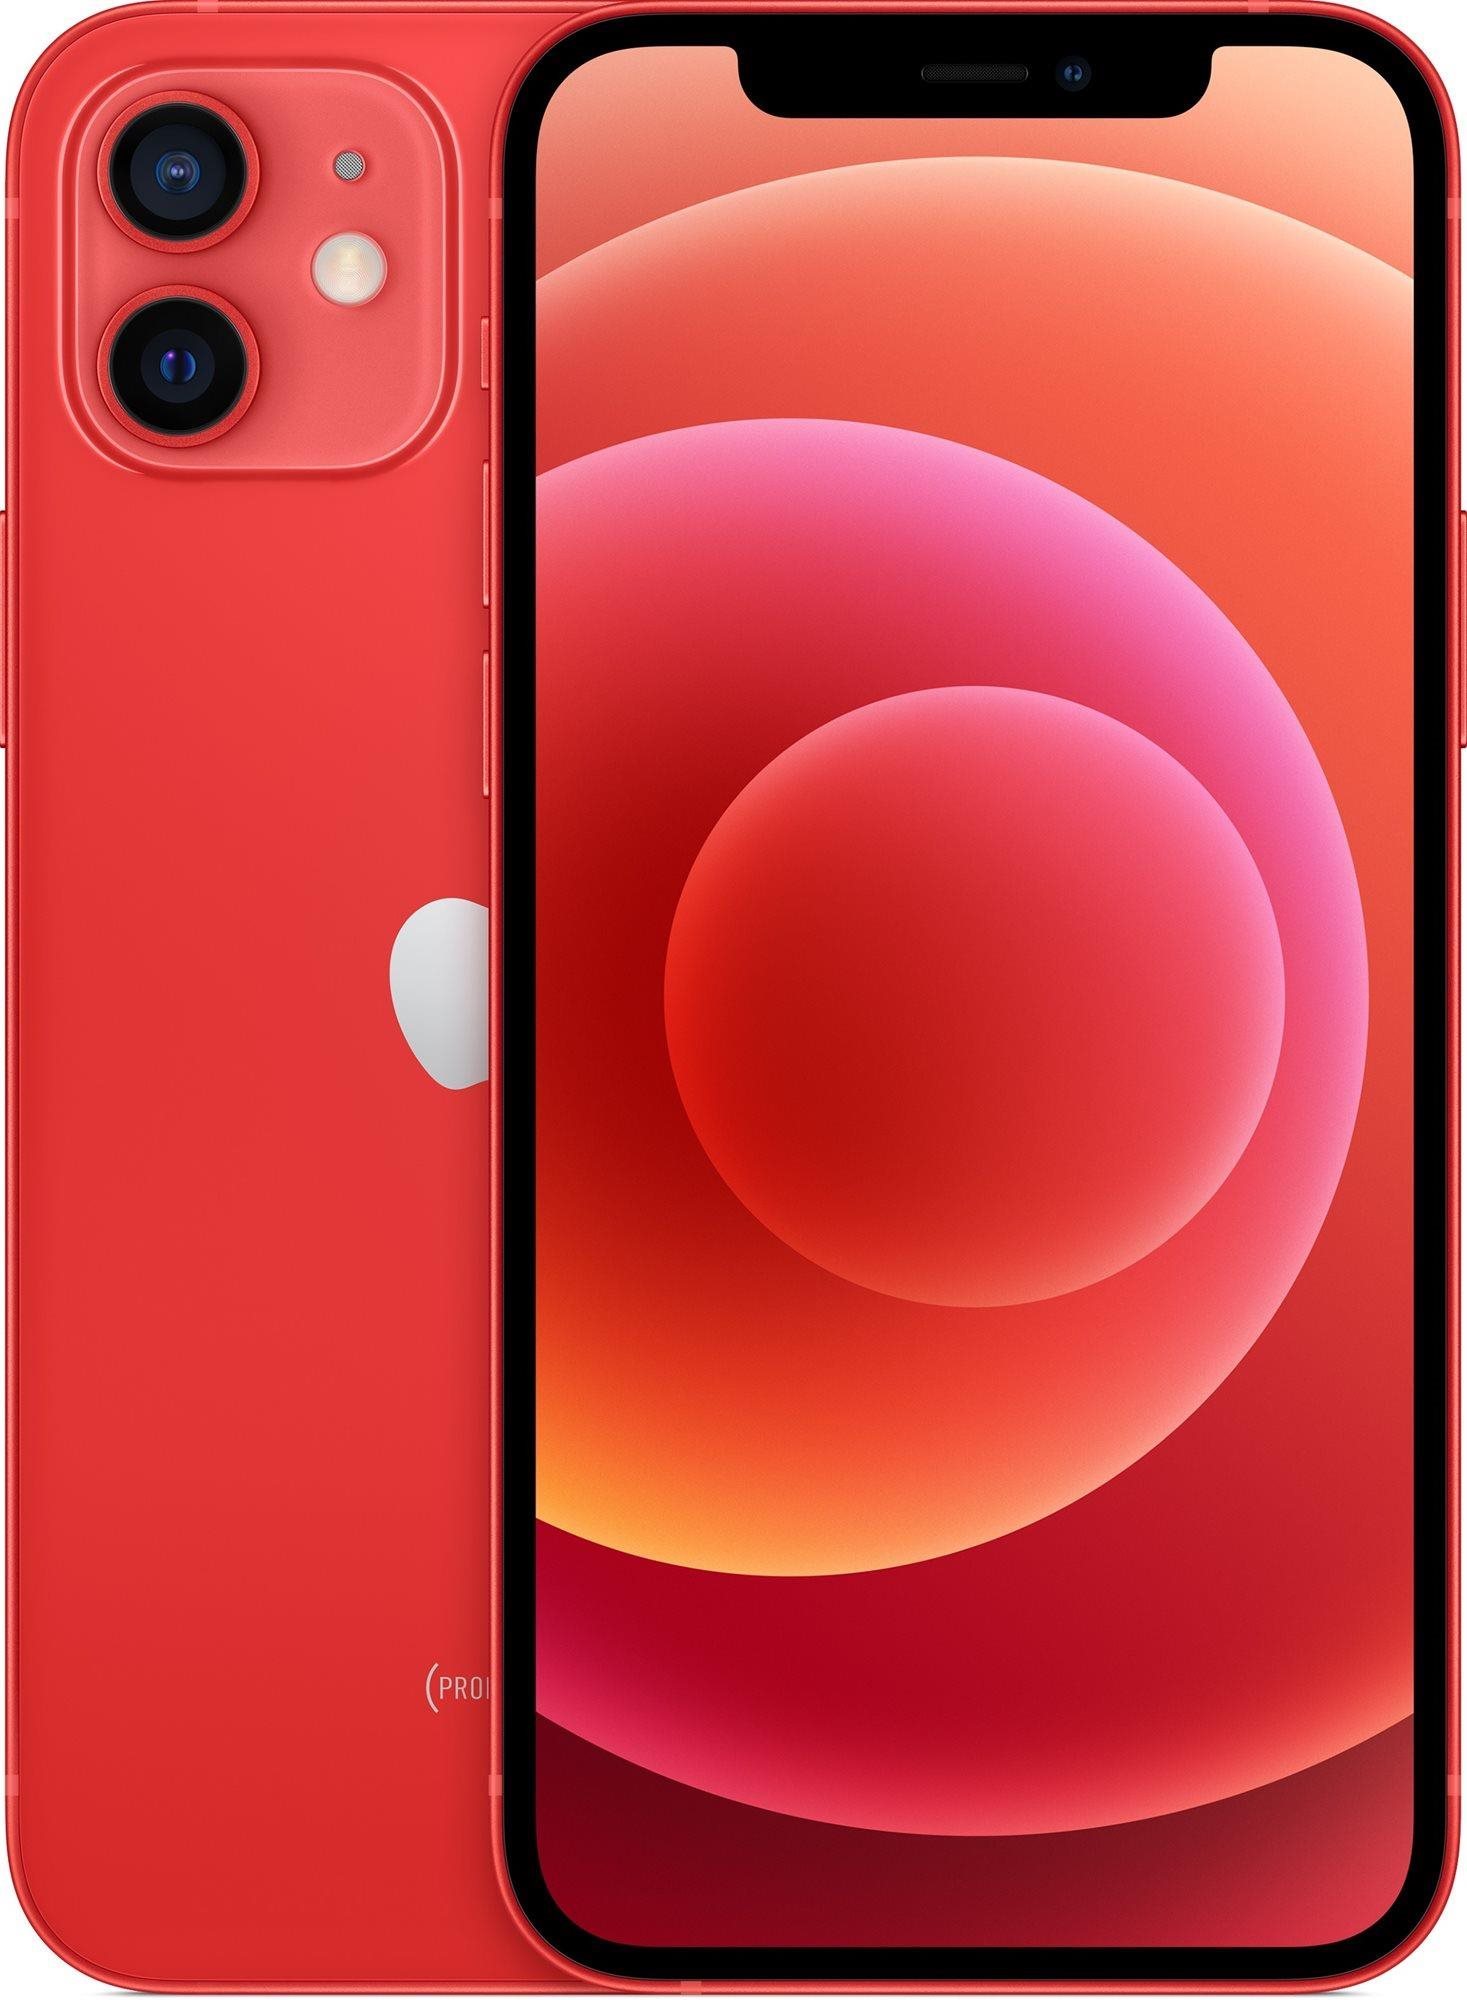 Apple iPhone 12 64GB piros